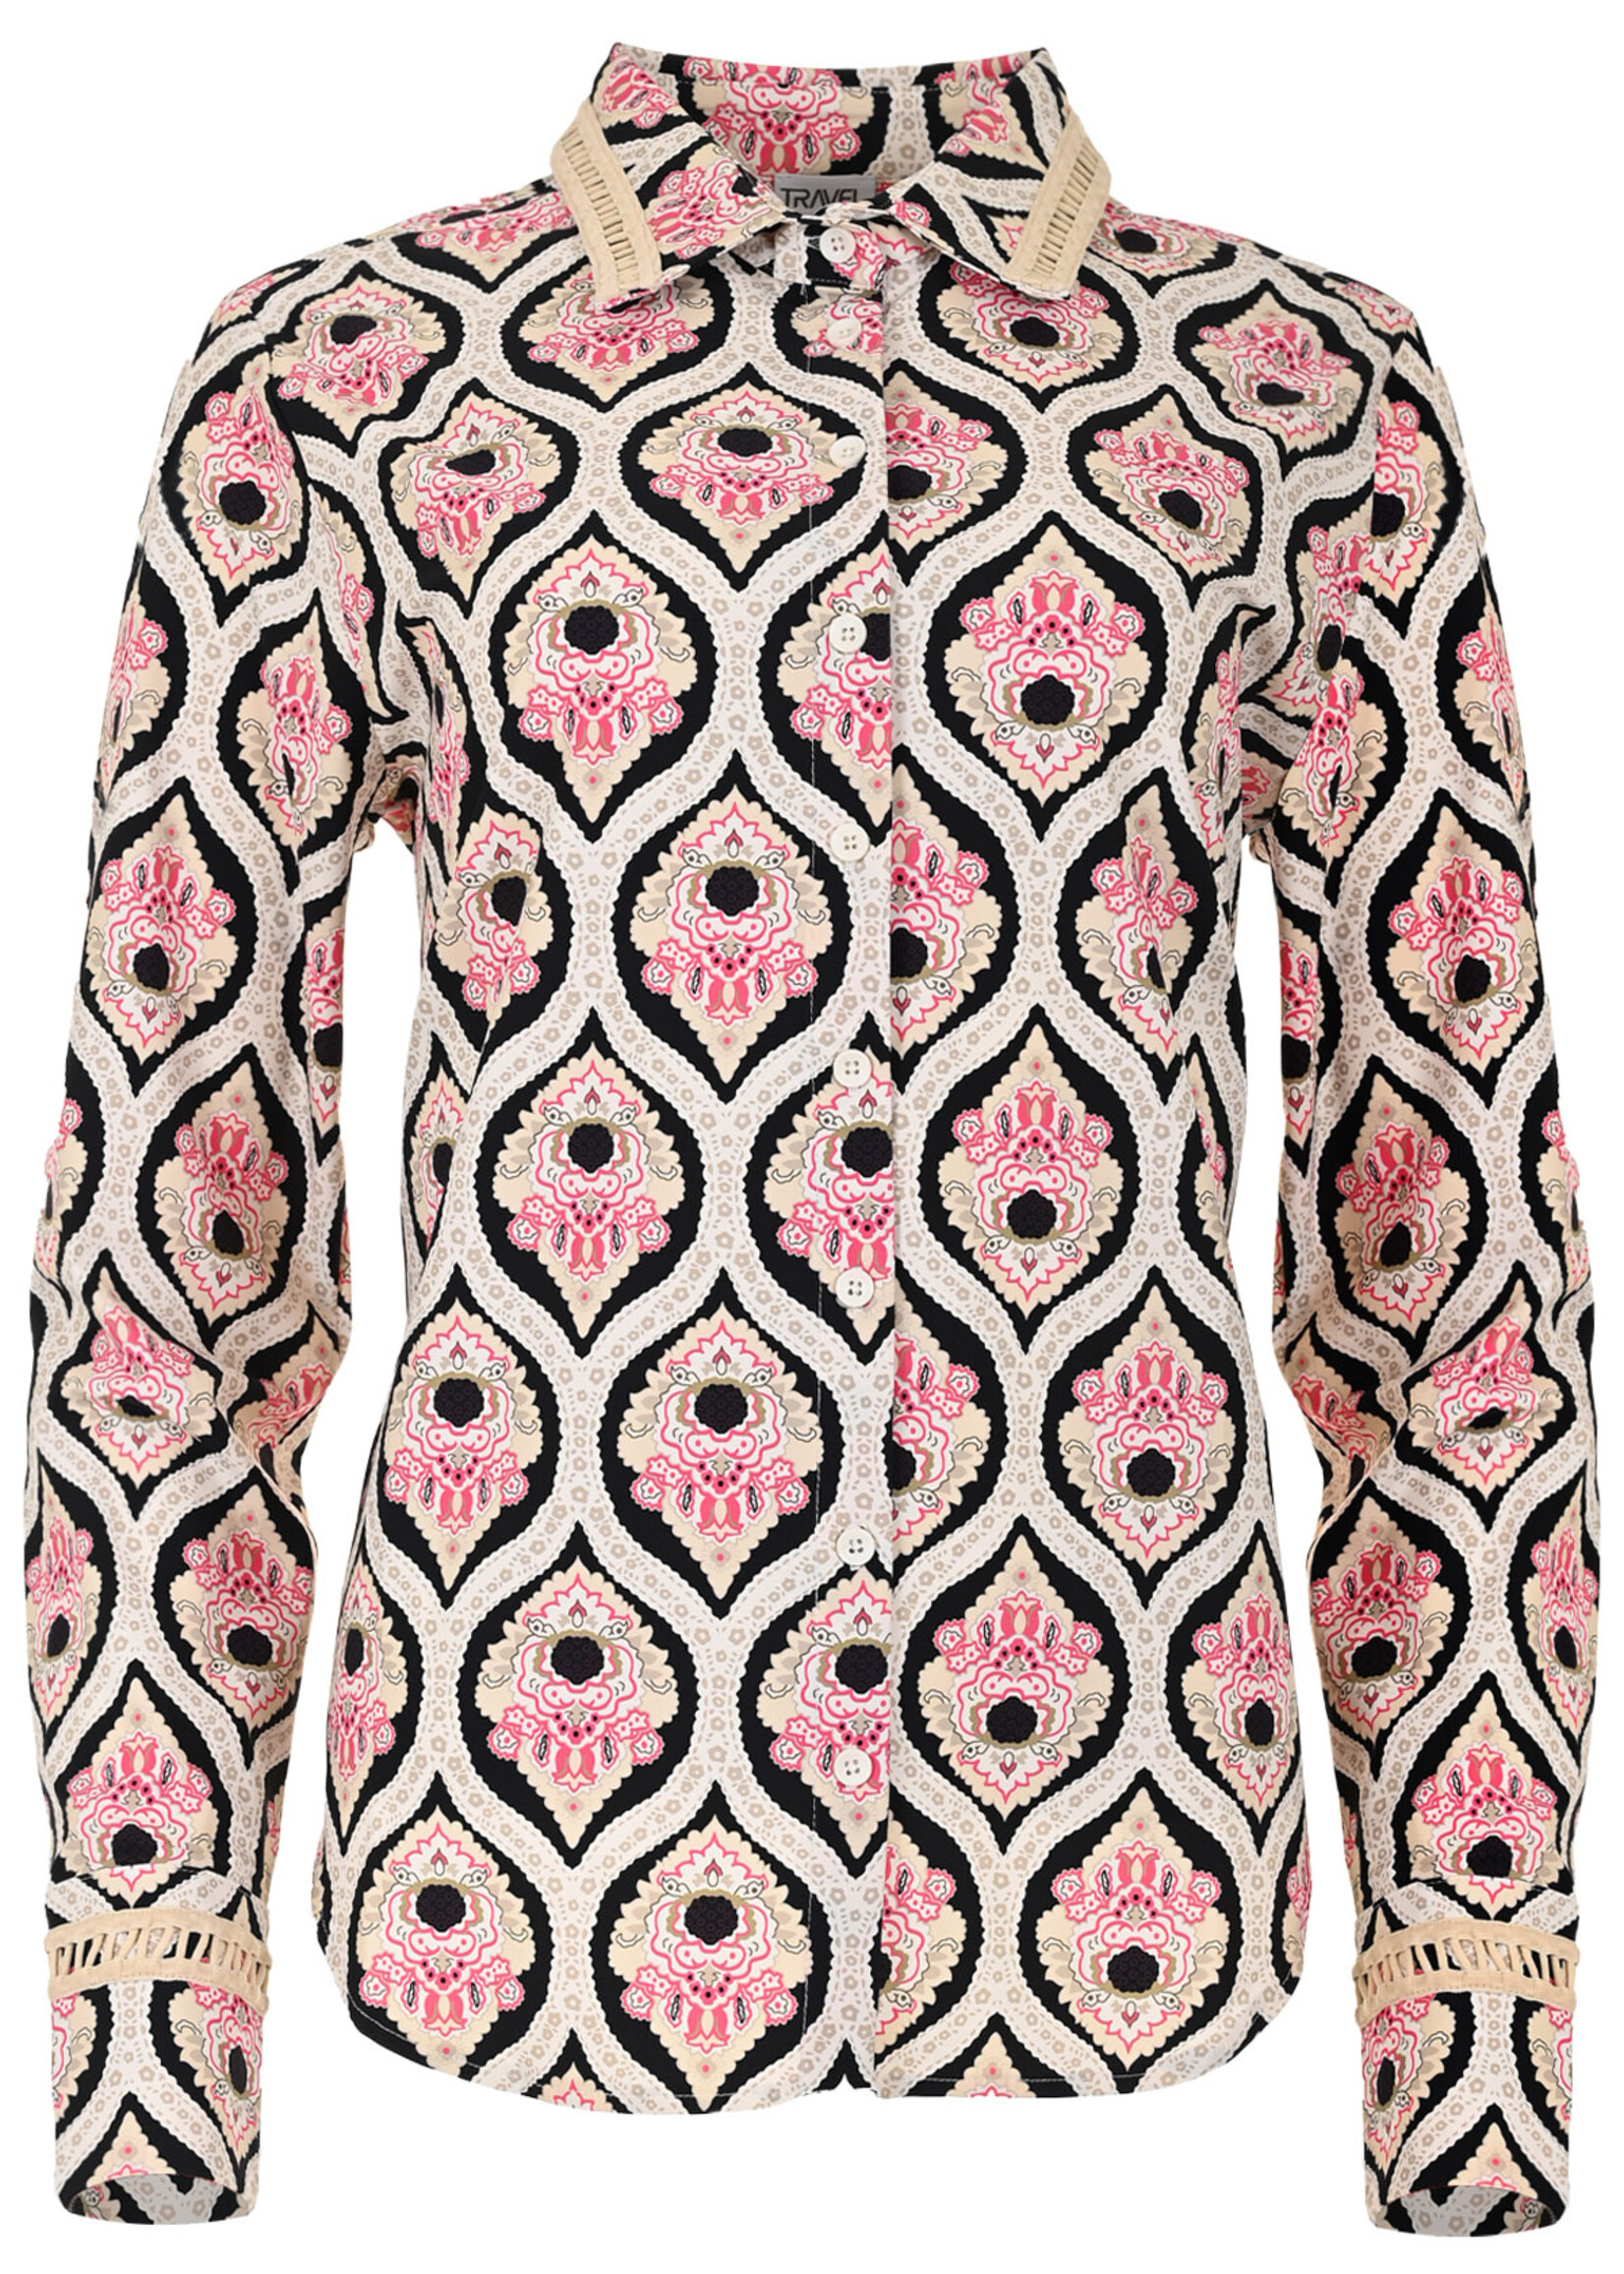 Maicazz Travel blouse fayette egypt eye